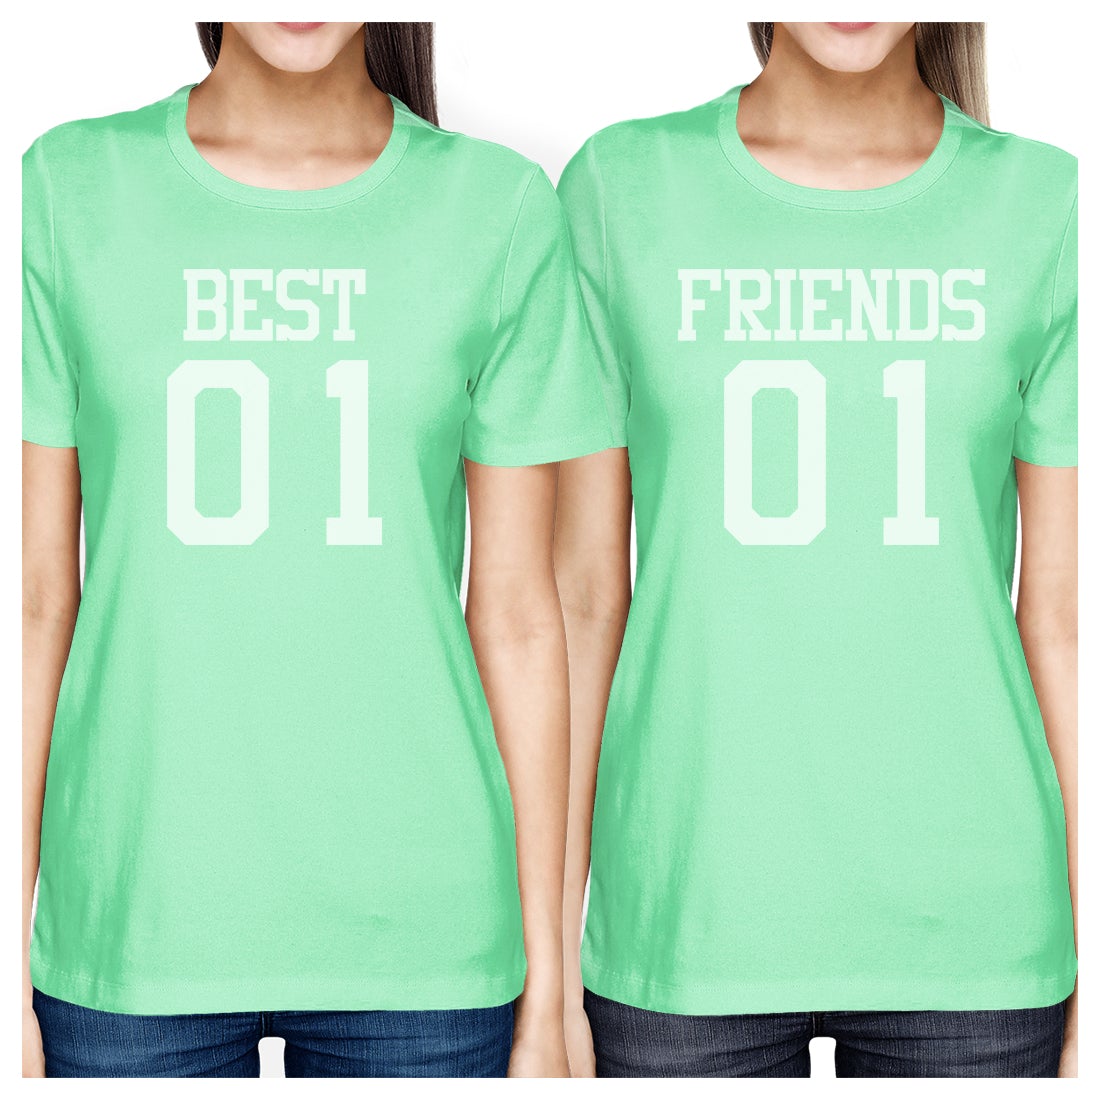 Best01 Friends01 BFF Matching Mint T-Shirts